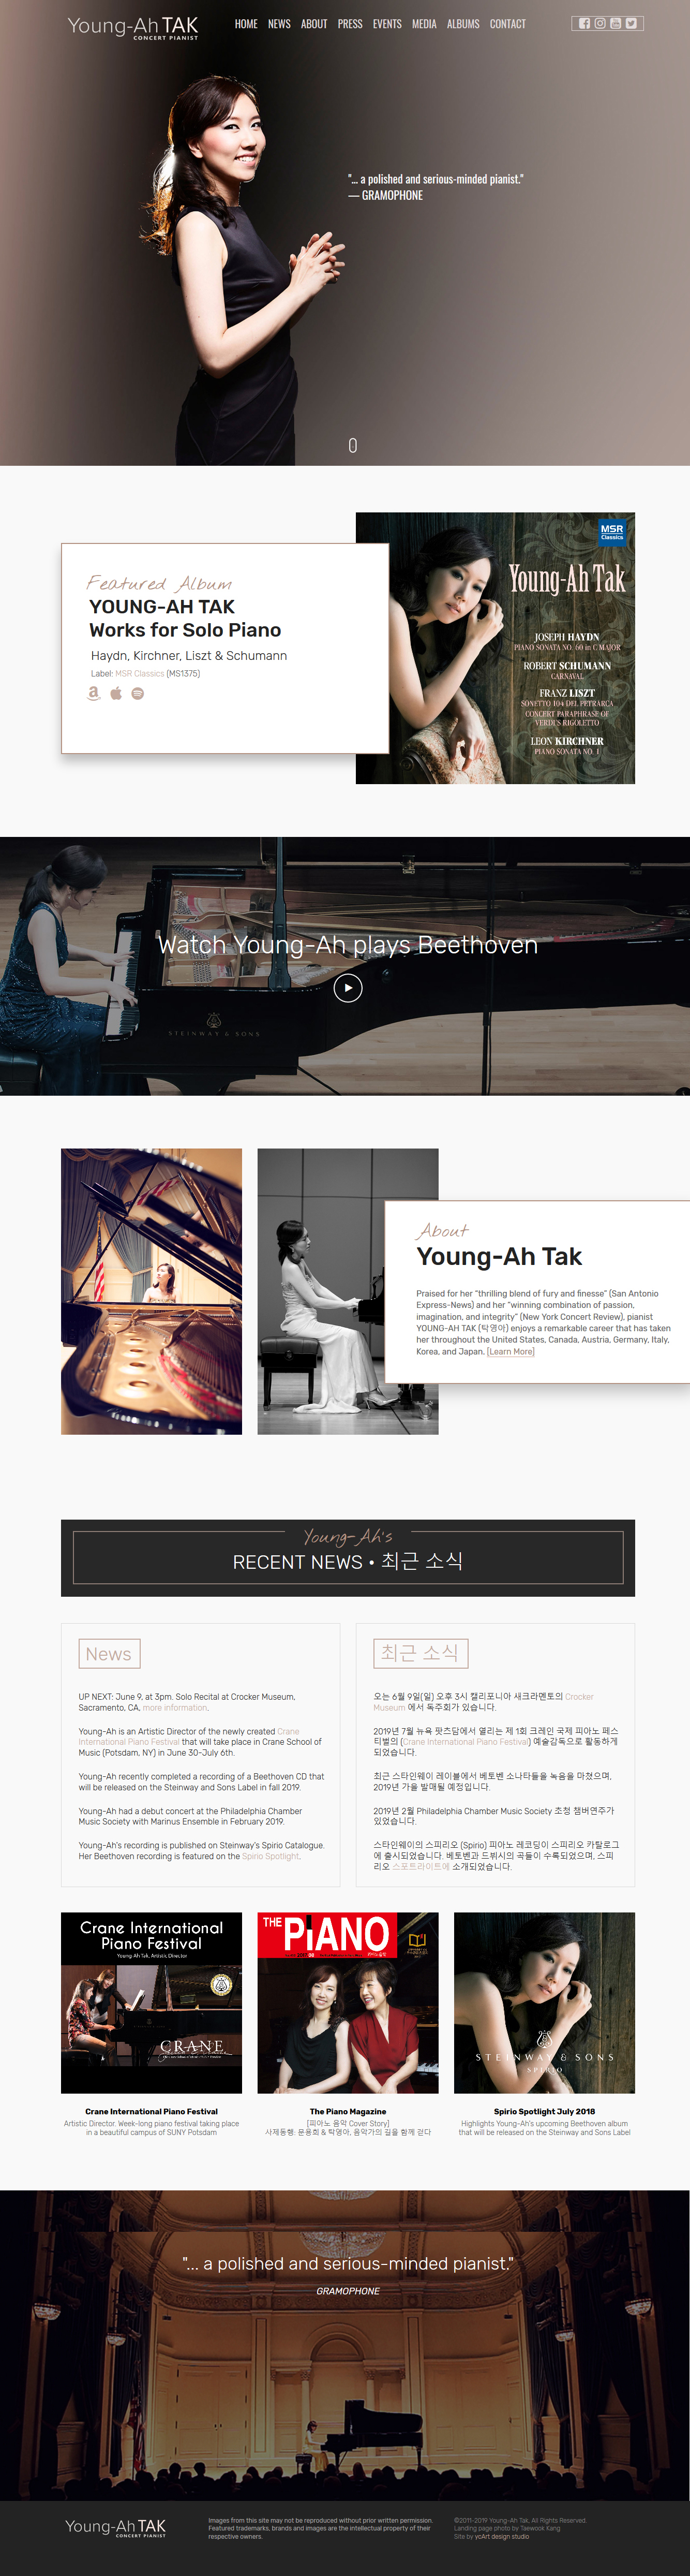 ycArt Website Design